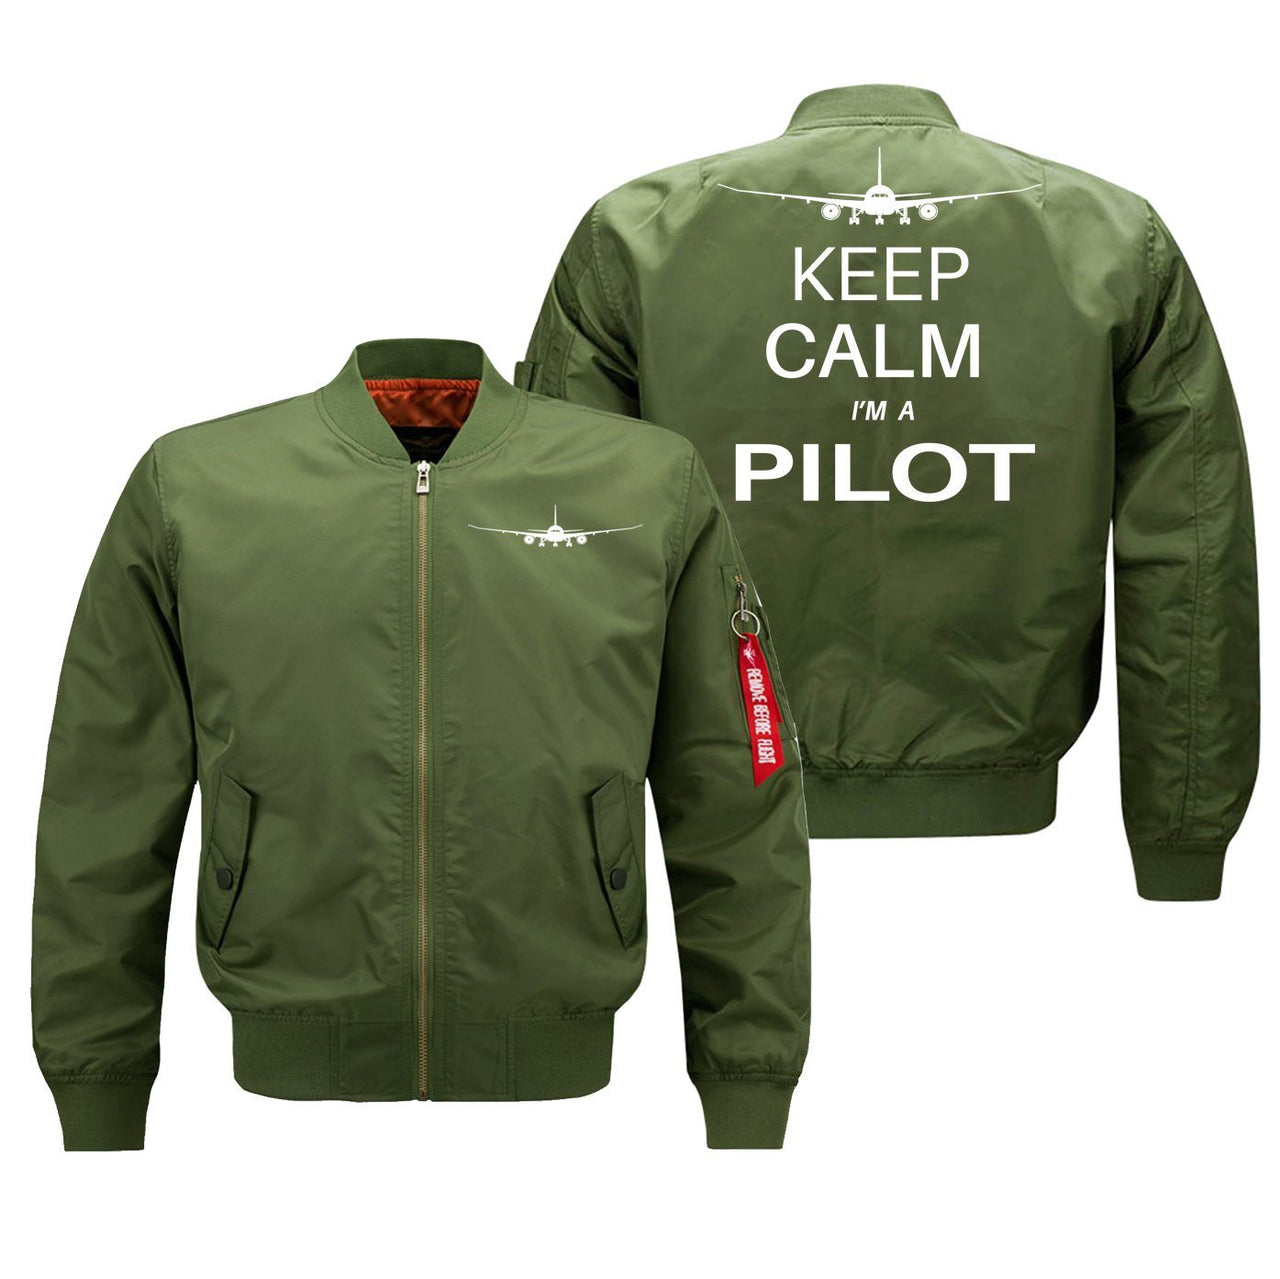 Keep Calm I'm a Pilot Designed Pilot Jackets (Customizable) Pilot Eyes Store Green (Thin) M (US XS) 